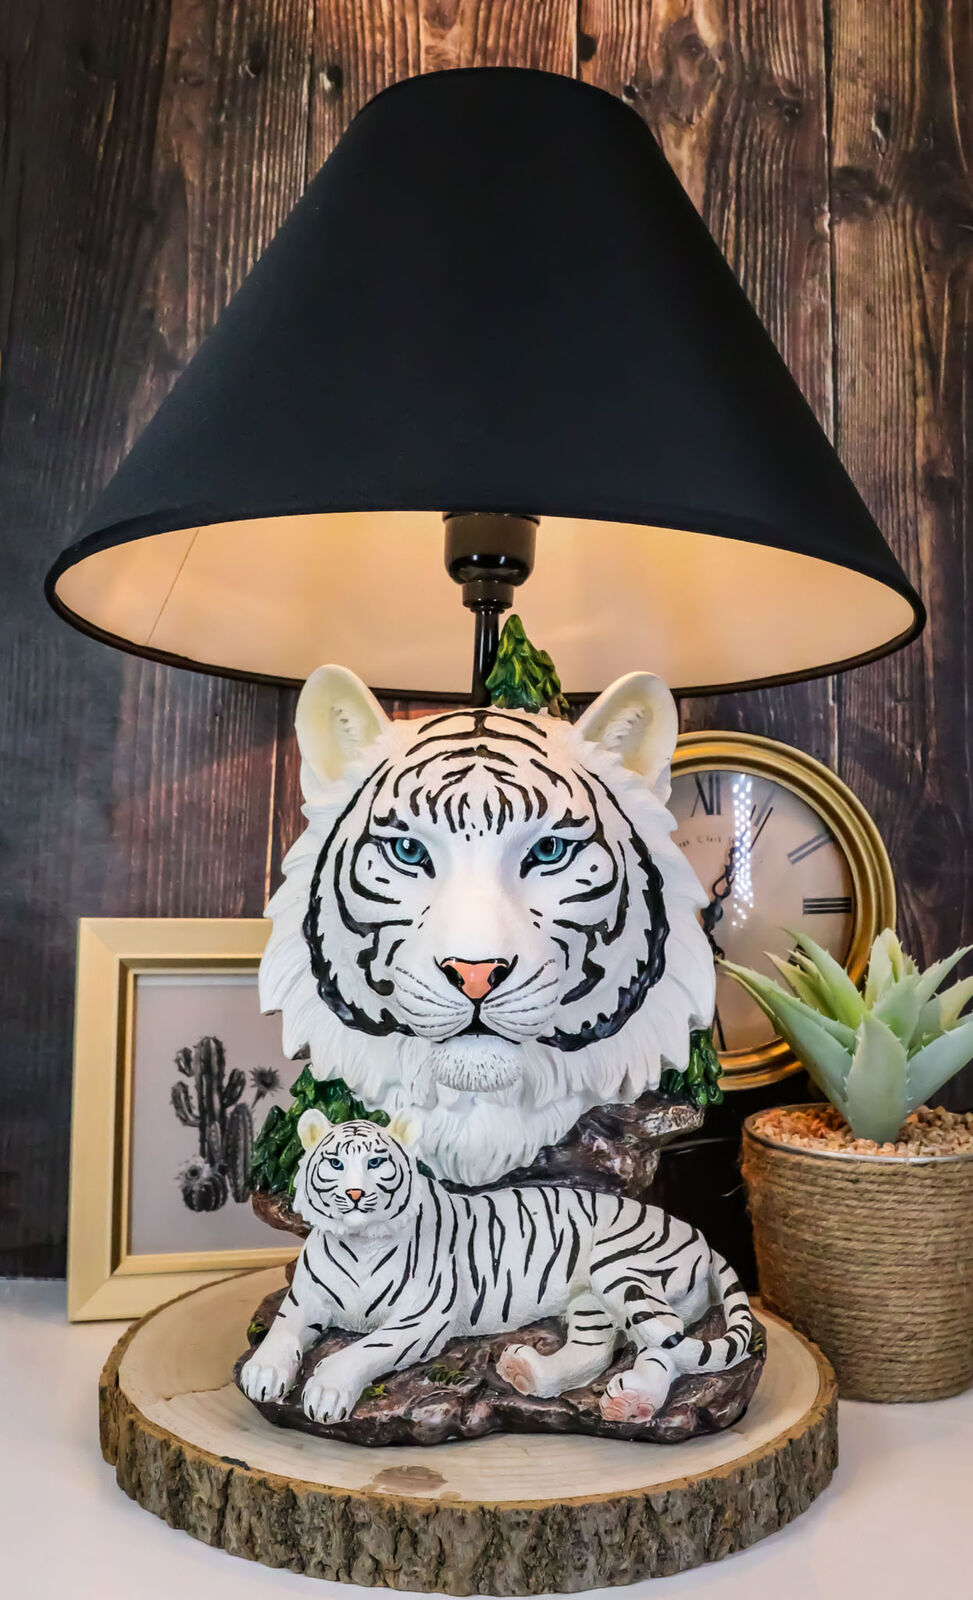 Ebros White Rare Alaskan Tiger Desktop Table Lamp Statue With Black Fabric Shade